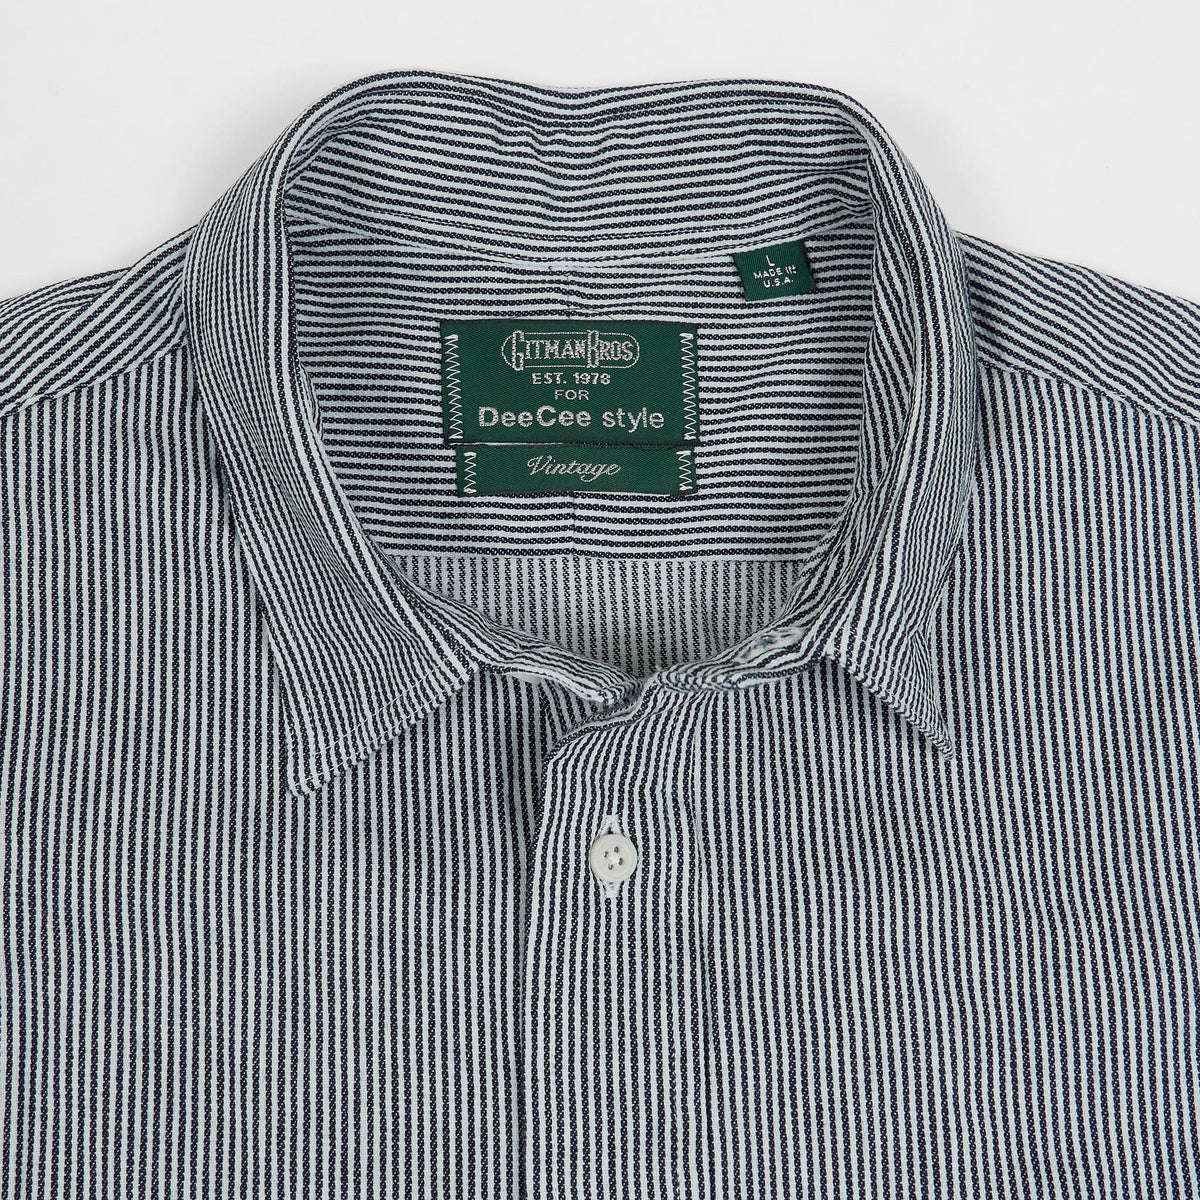 Gitman Vintage for DeeCee style Striped Cotton Workshirt